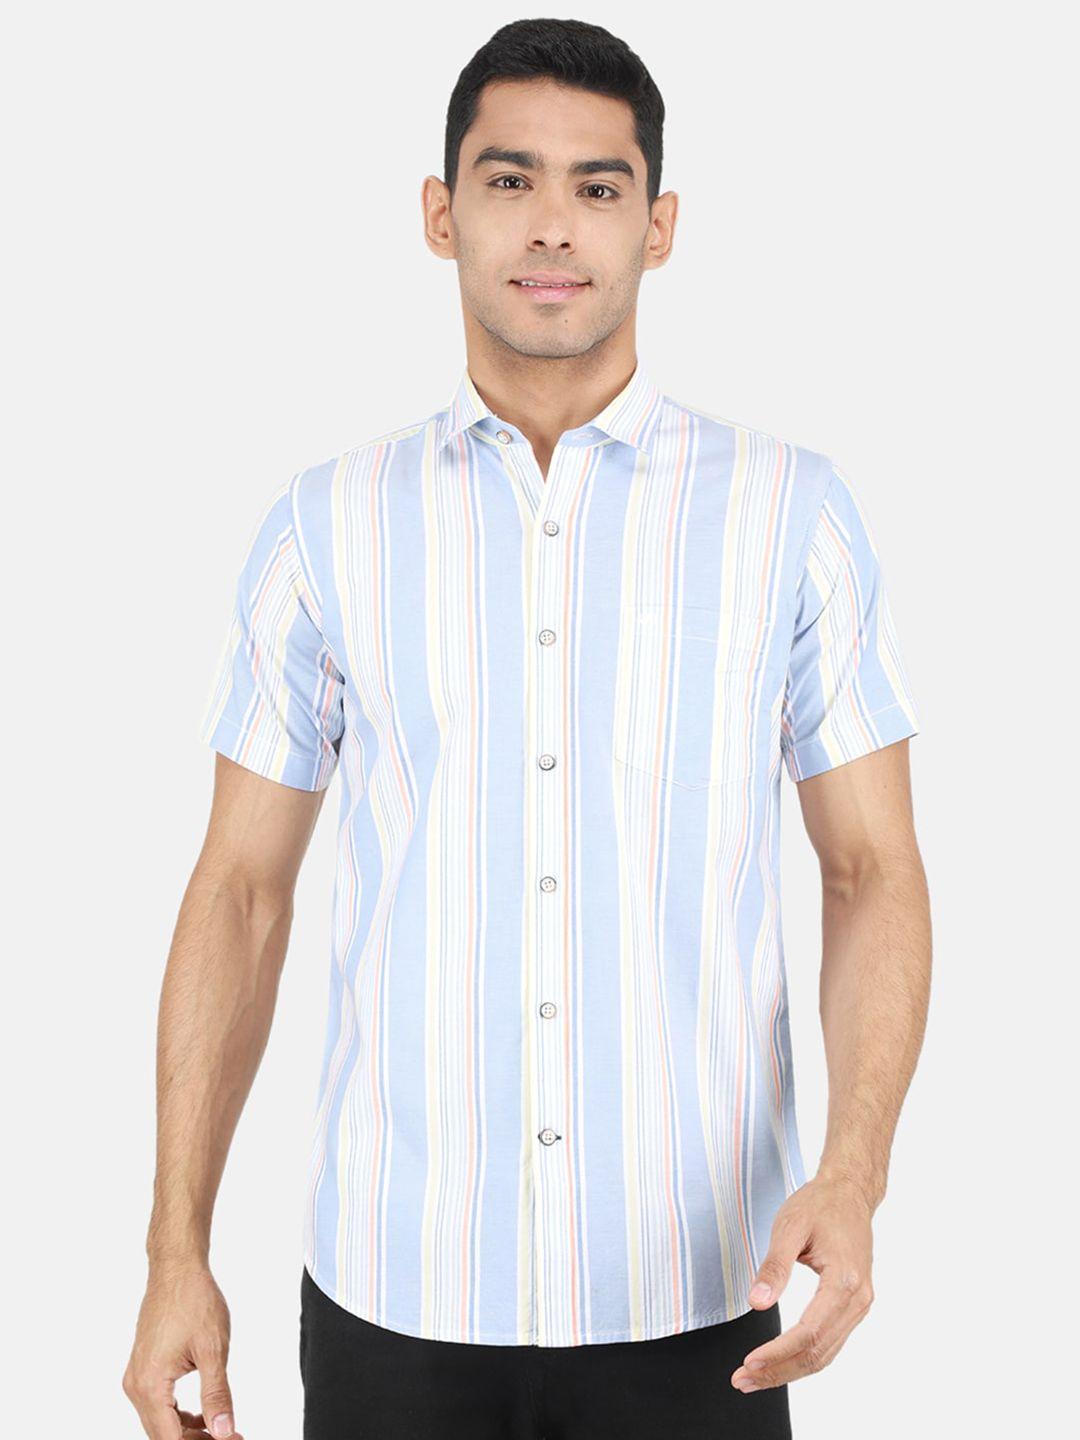 monte-carlo-vertical-striped-cotton-casual-shirt